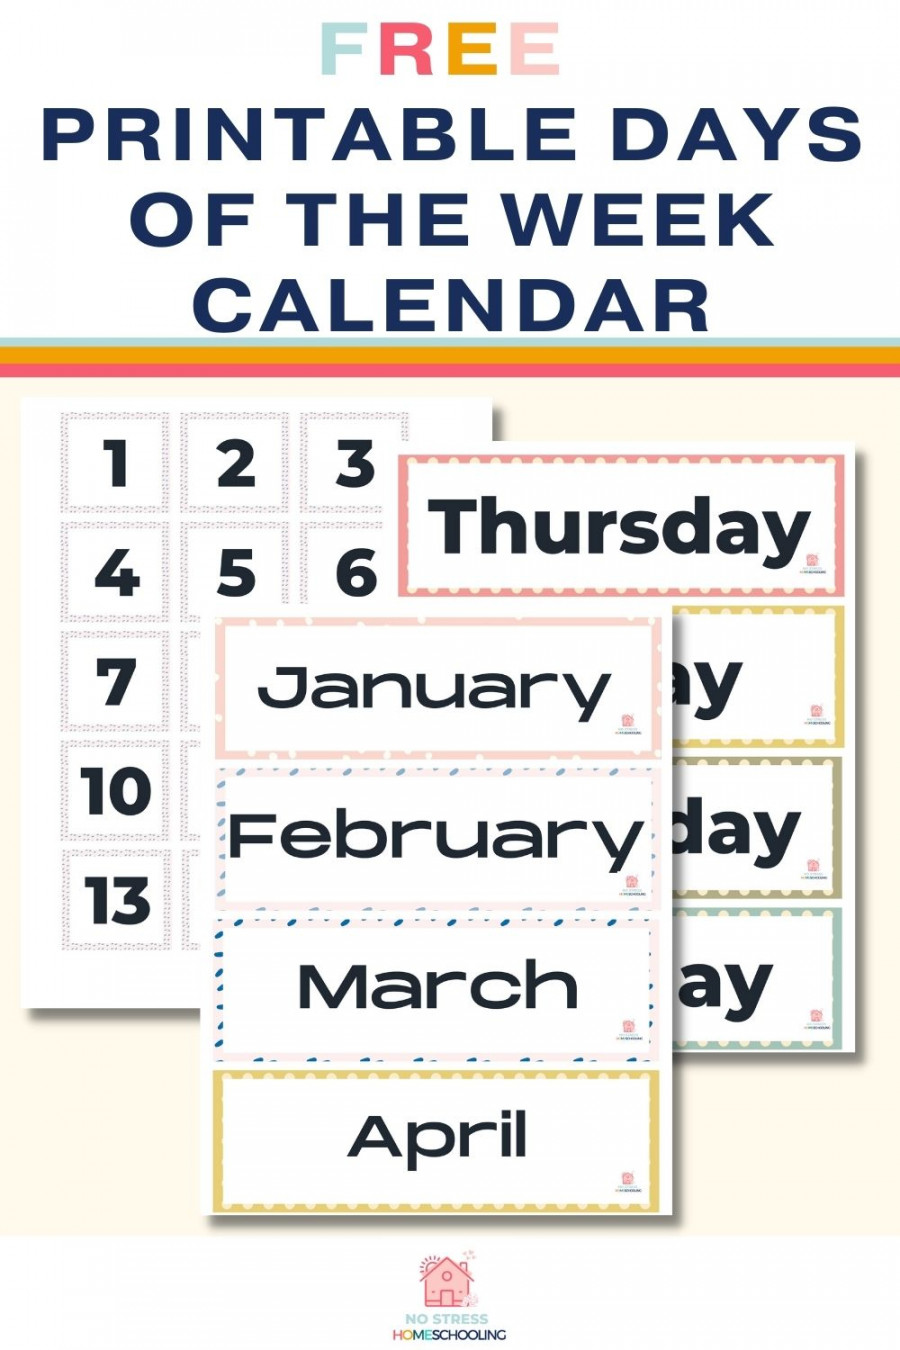 Free Printable Days Of The Week Calendar For Preschoolers - No